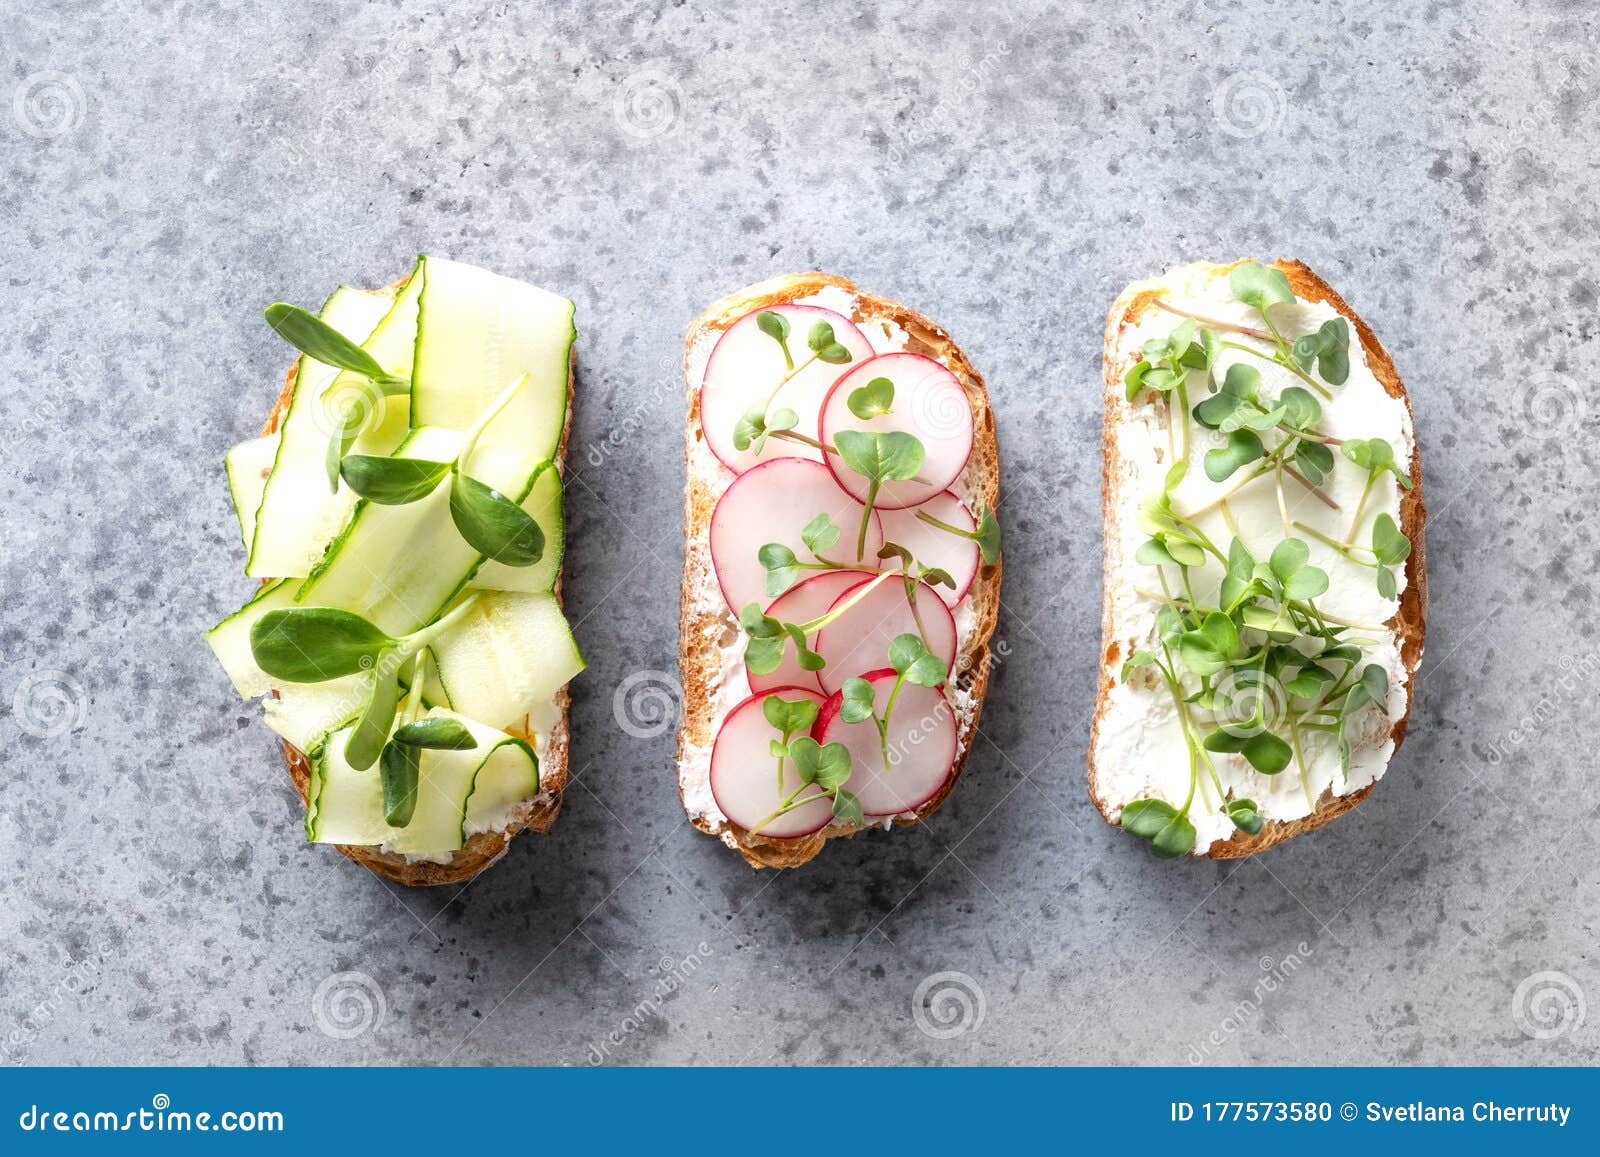 sandwiches with sundries tomatoes, fresh radish, microgreens, cream cheese on grey background.